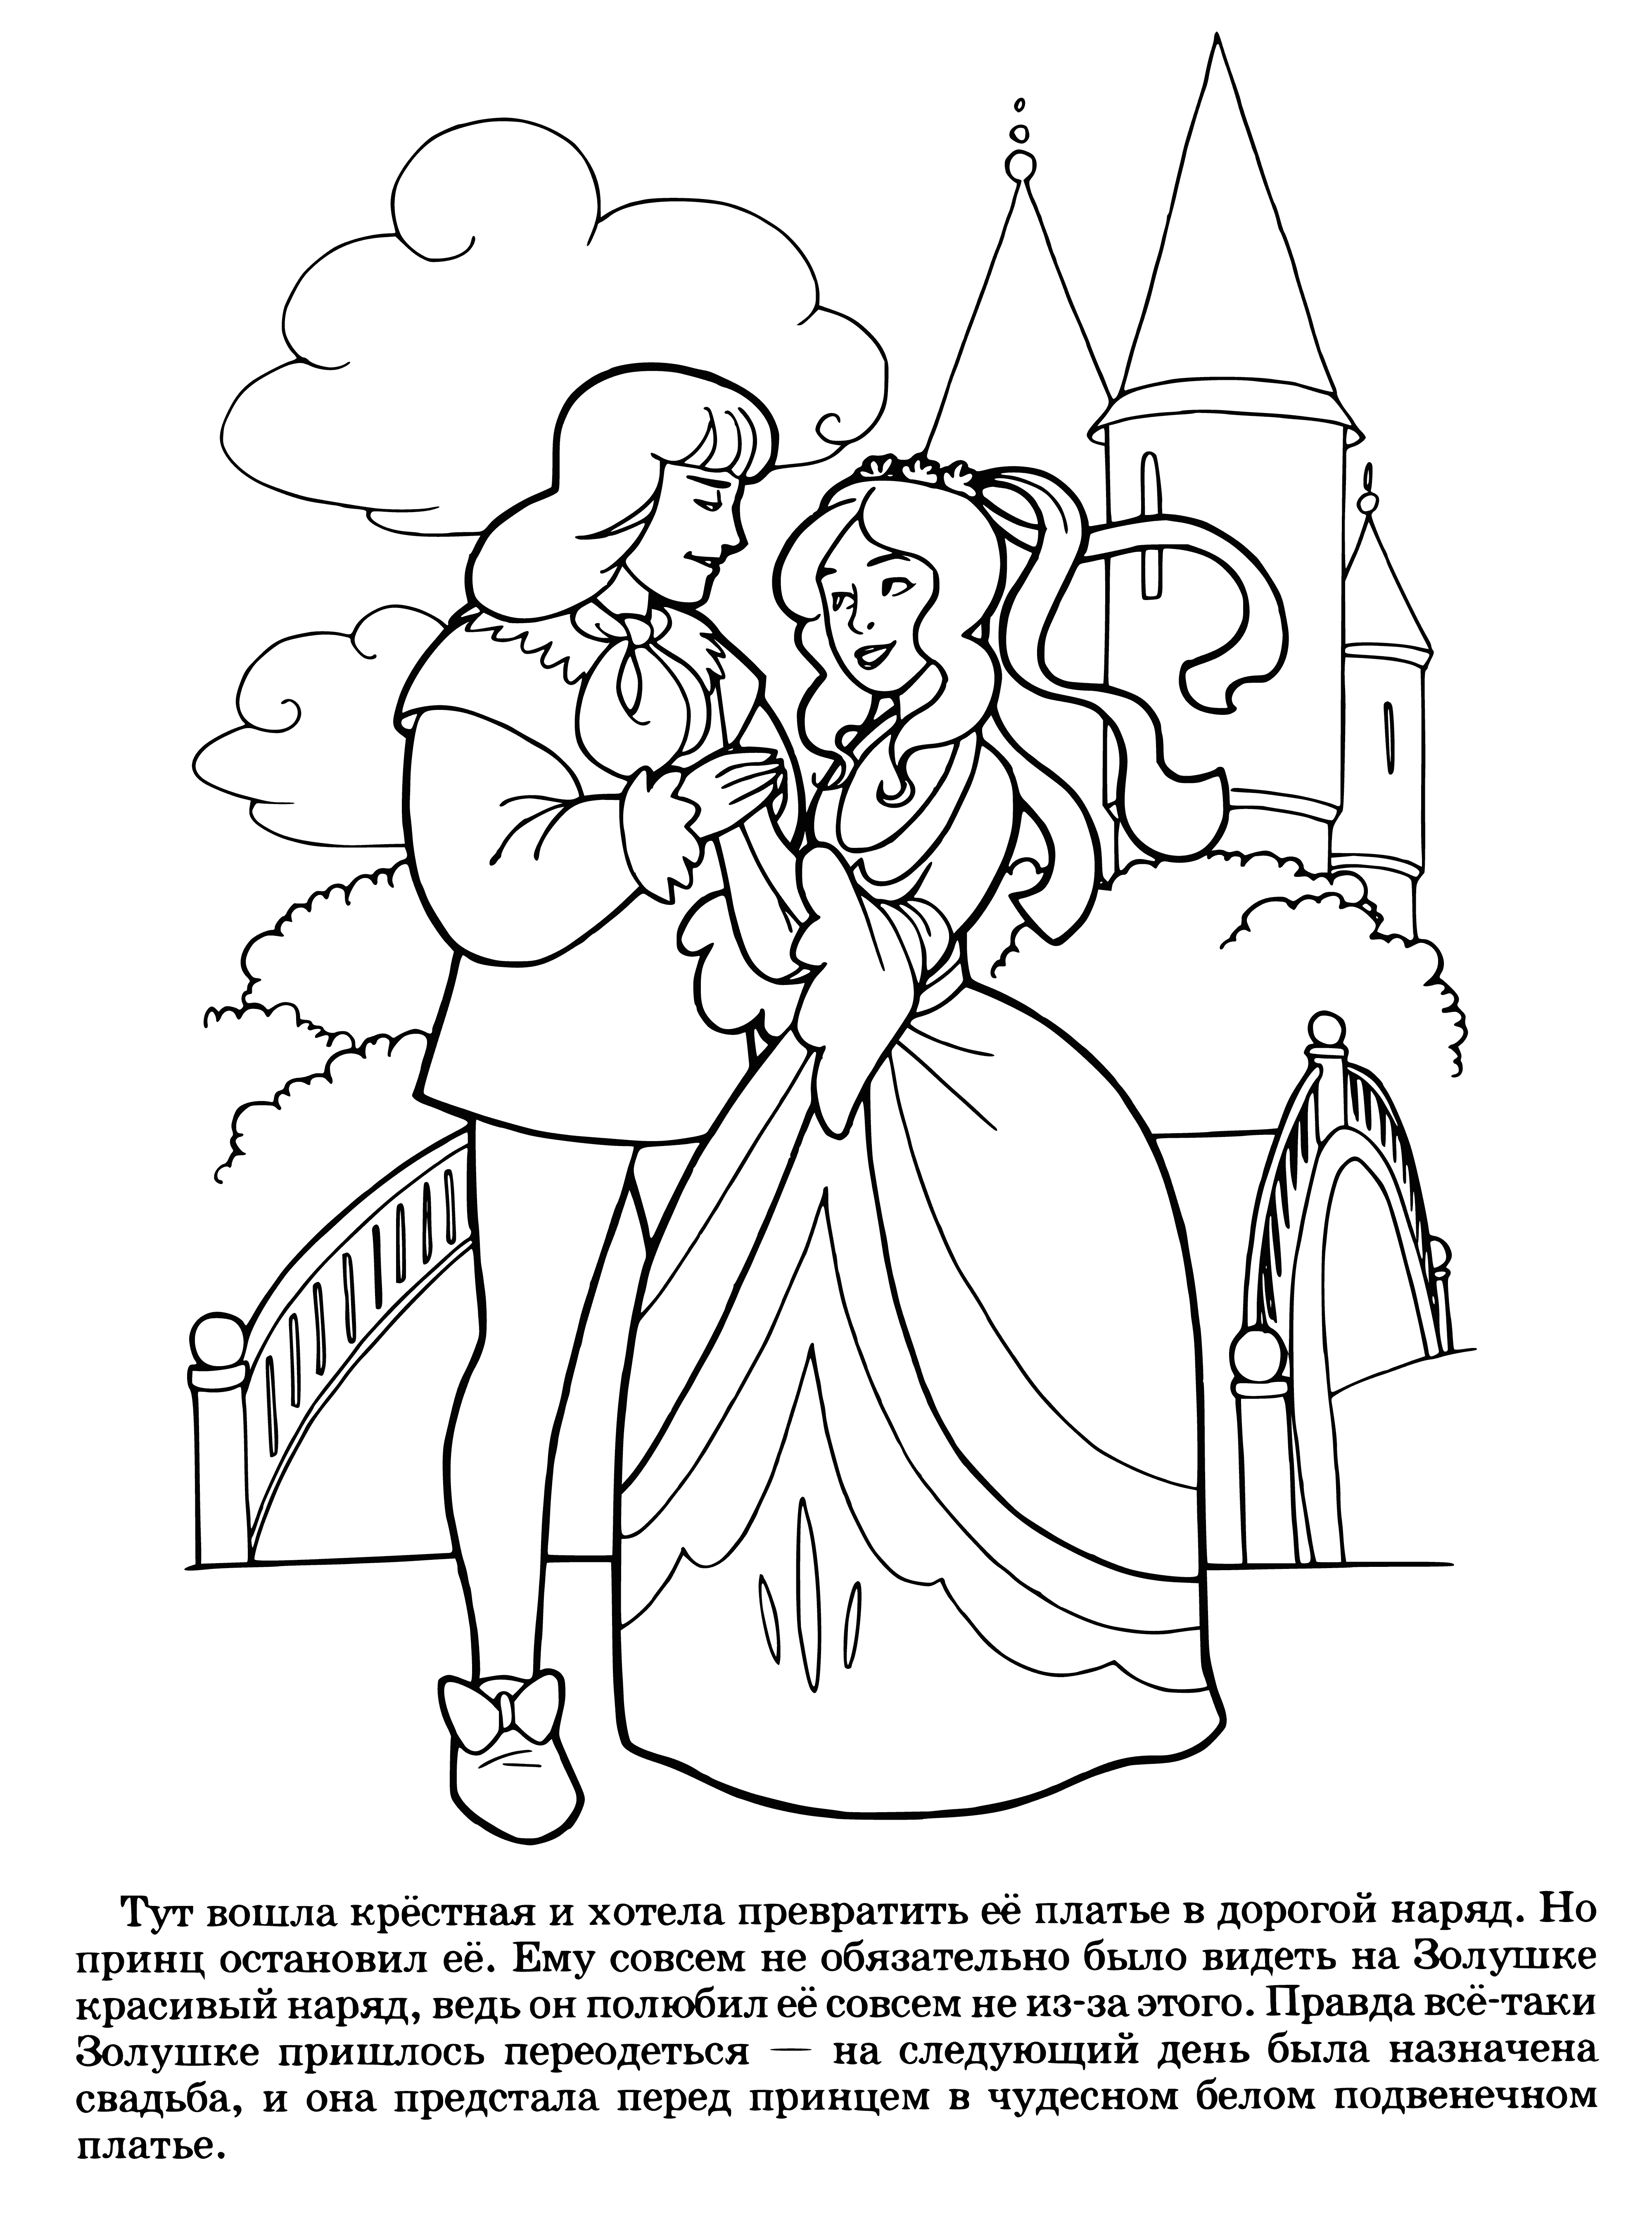 Ślub Kopciuszka kolorowanka